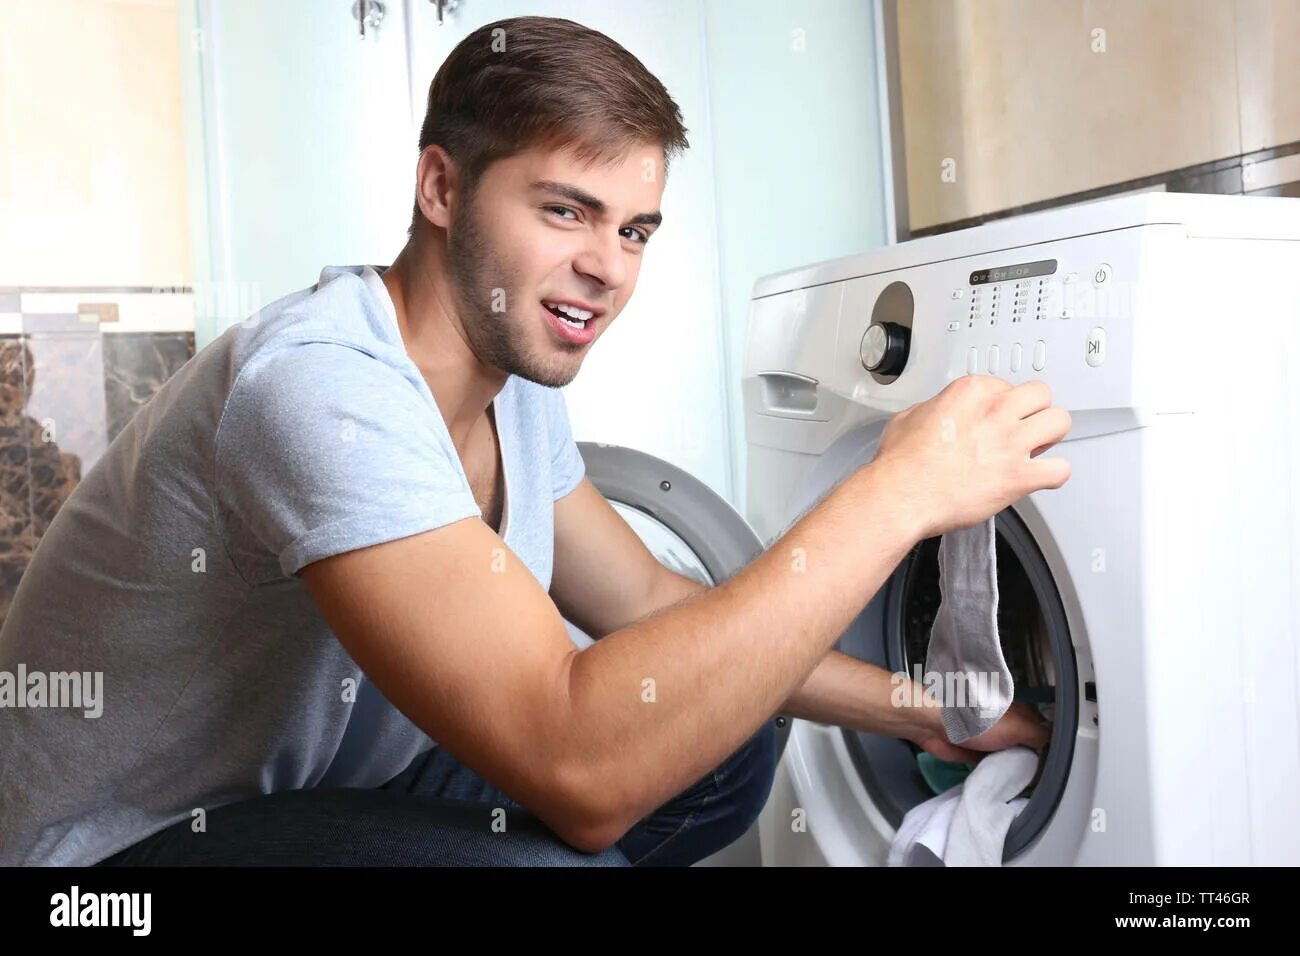 Loading man. Мужчина и стиральная машина. Стирка мужчина. Парень со стиральной машинкой. Человек в стиральной машине.